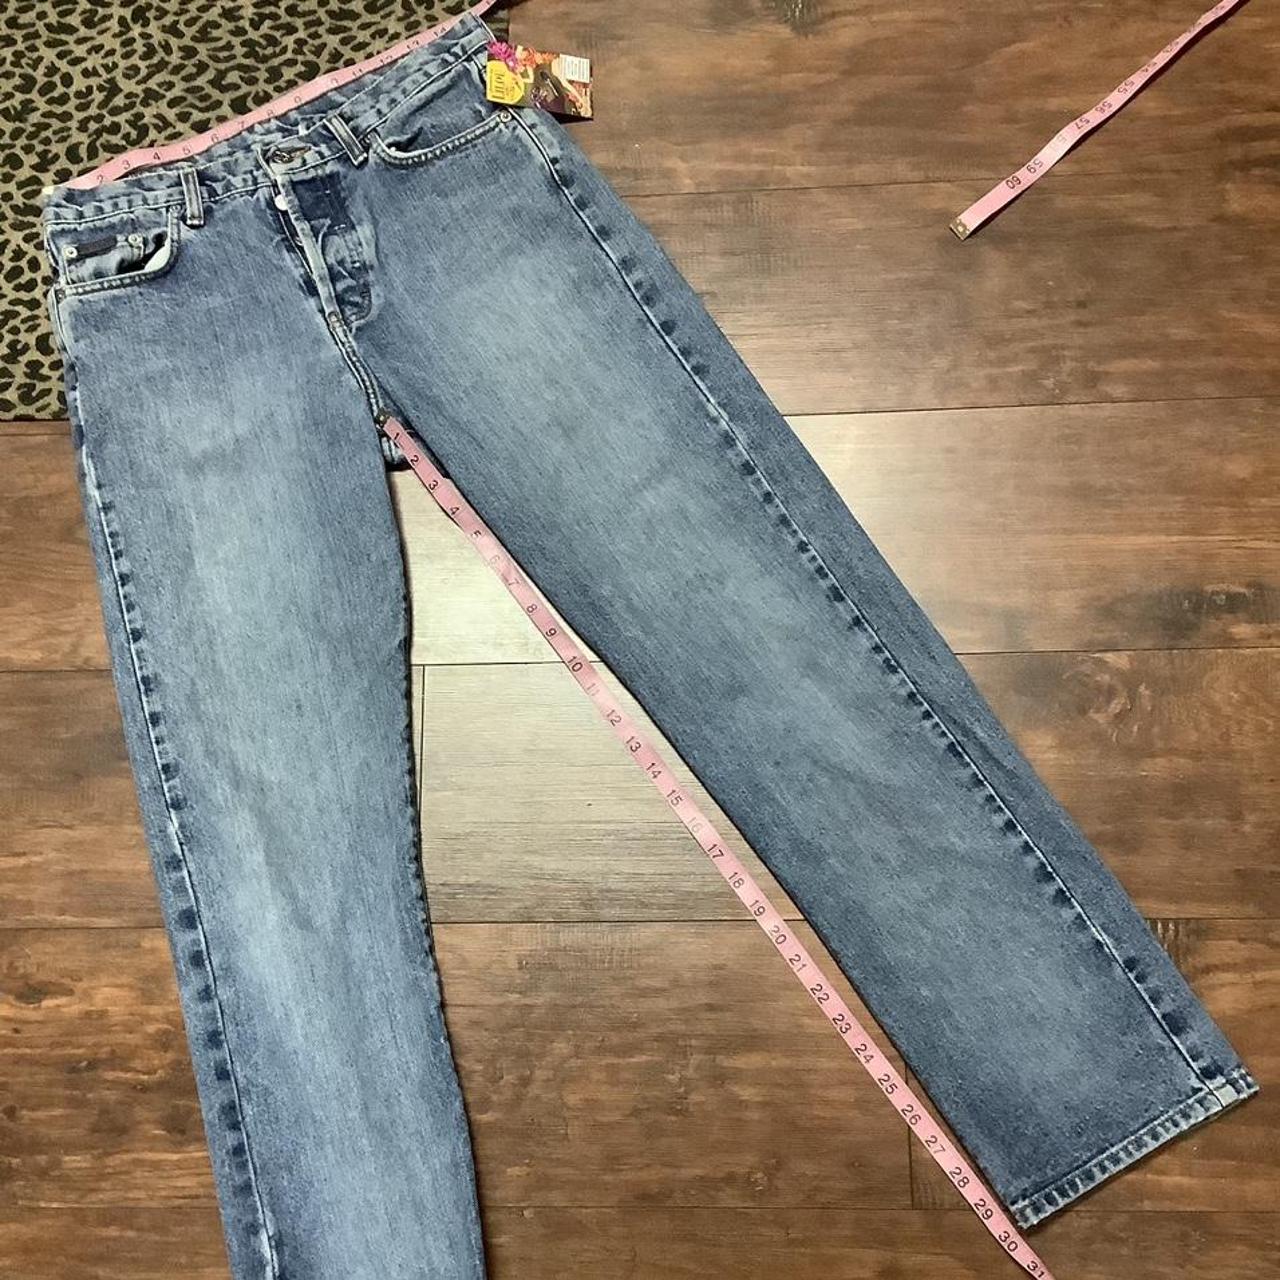 Product Image 3 - Vintage Ck jeans.
Labeled Size: 9
Measurements: